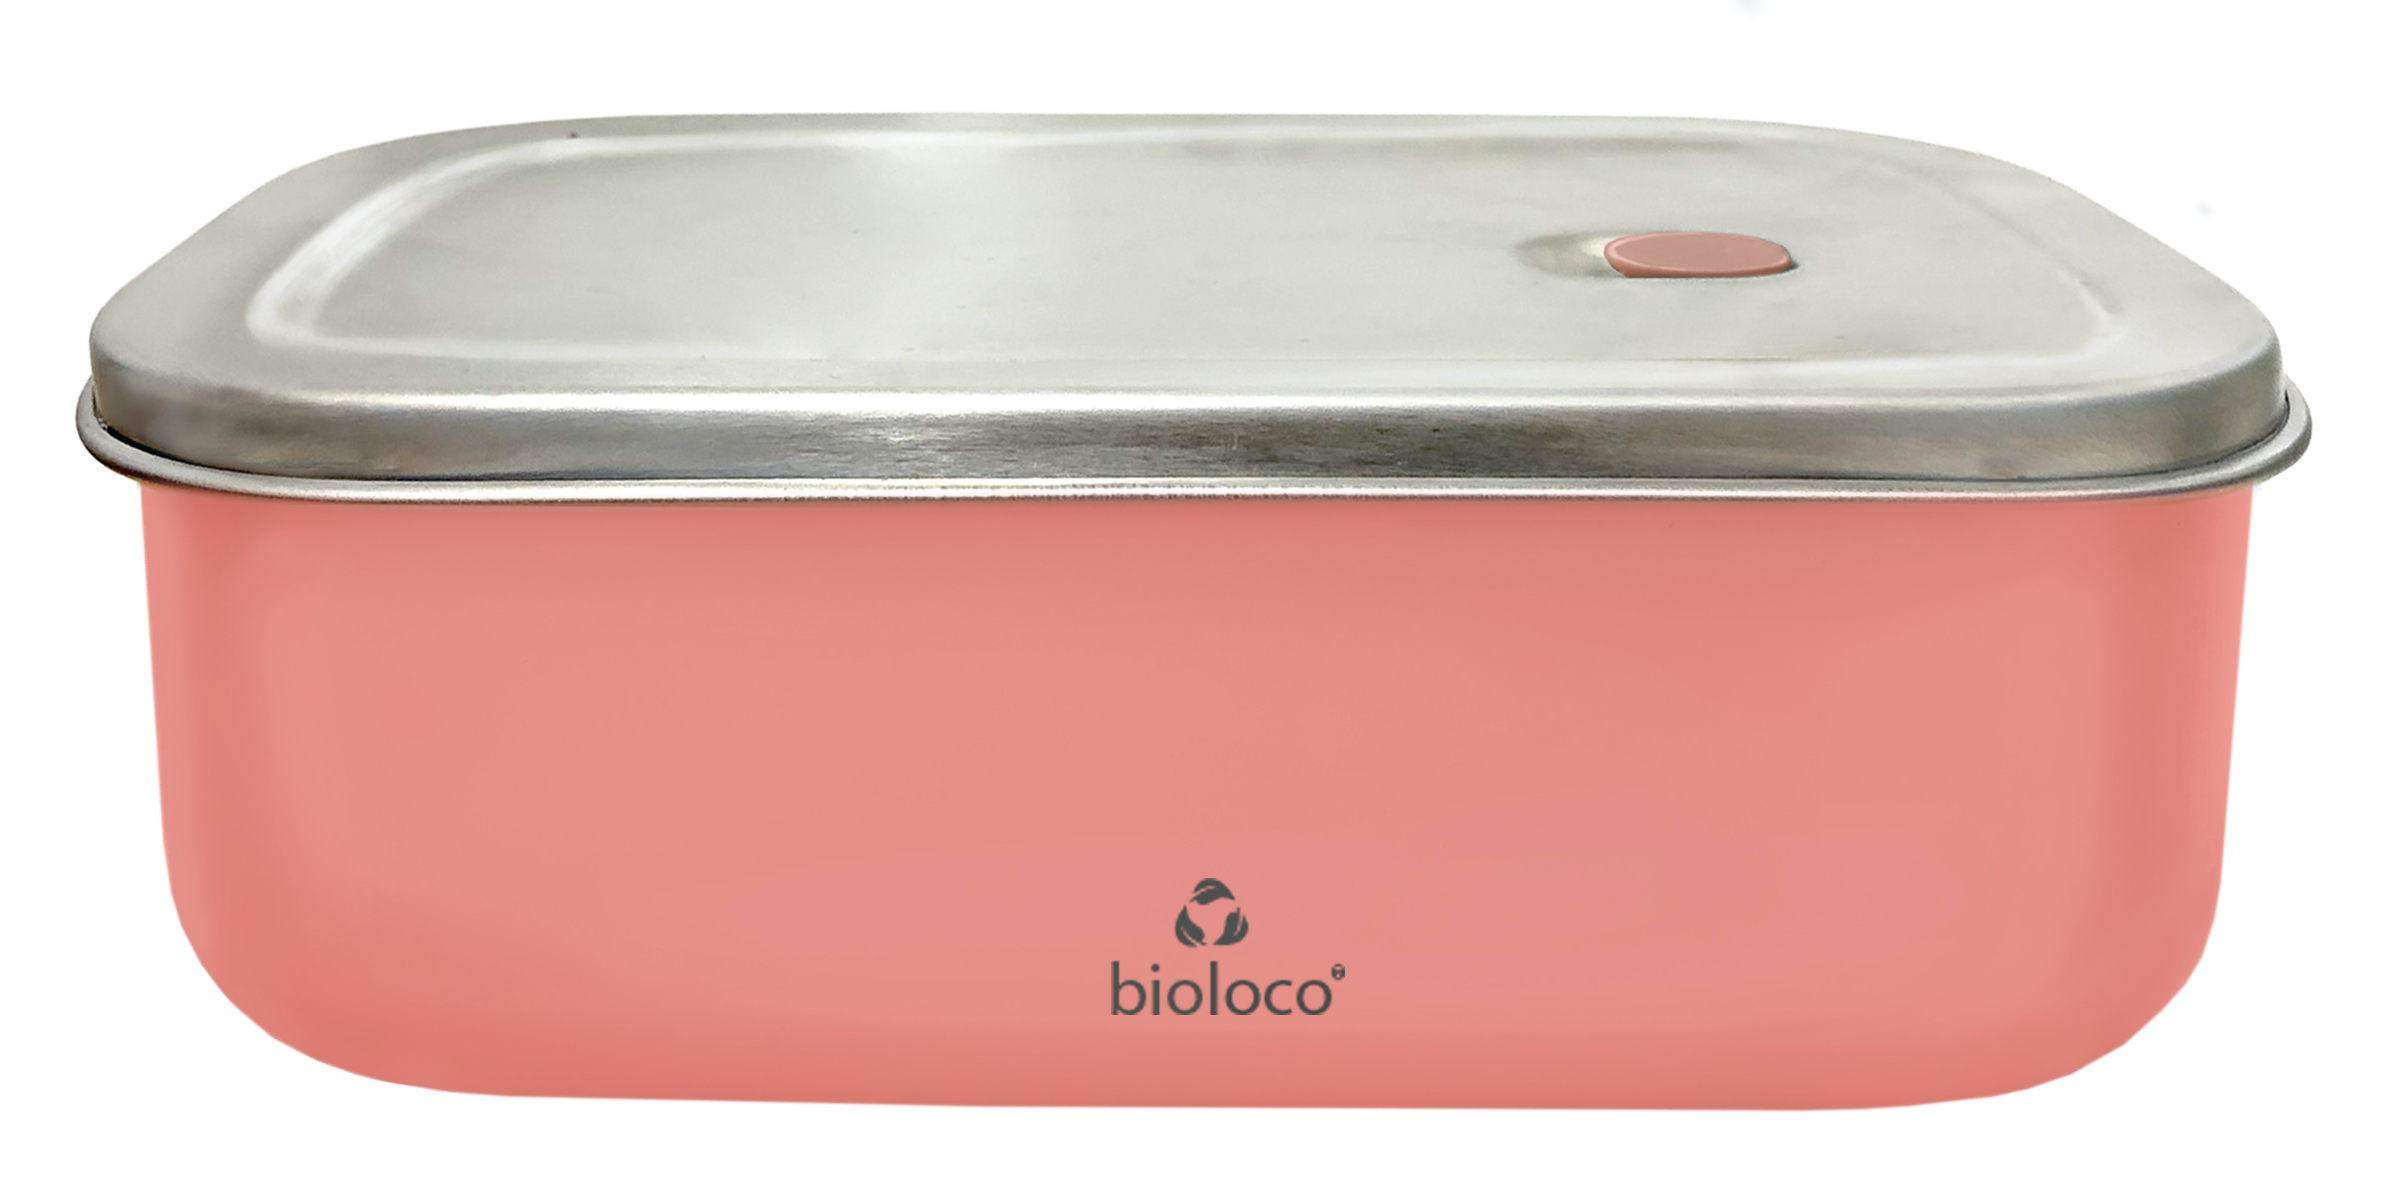 Zobrazit detail výrobku Bioloco Nerezový svačinový box 425 g růžový